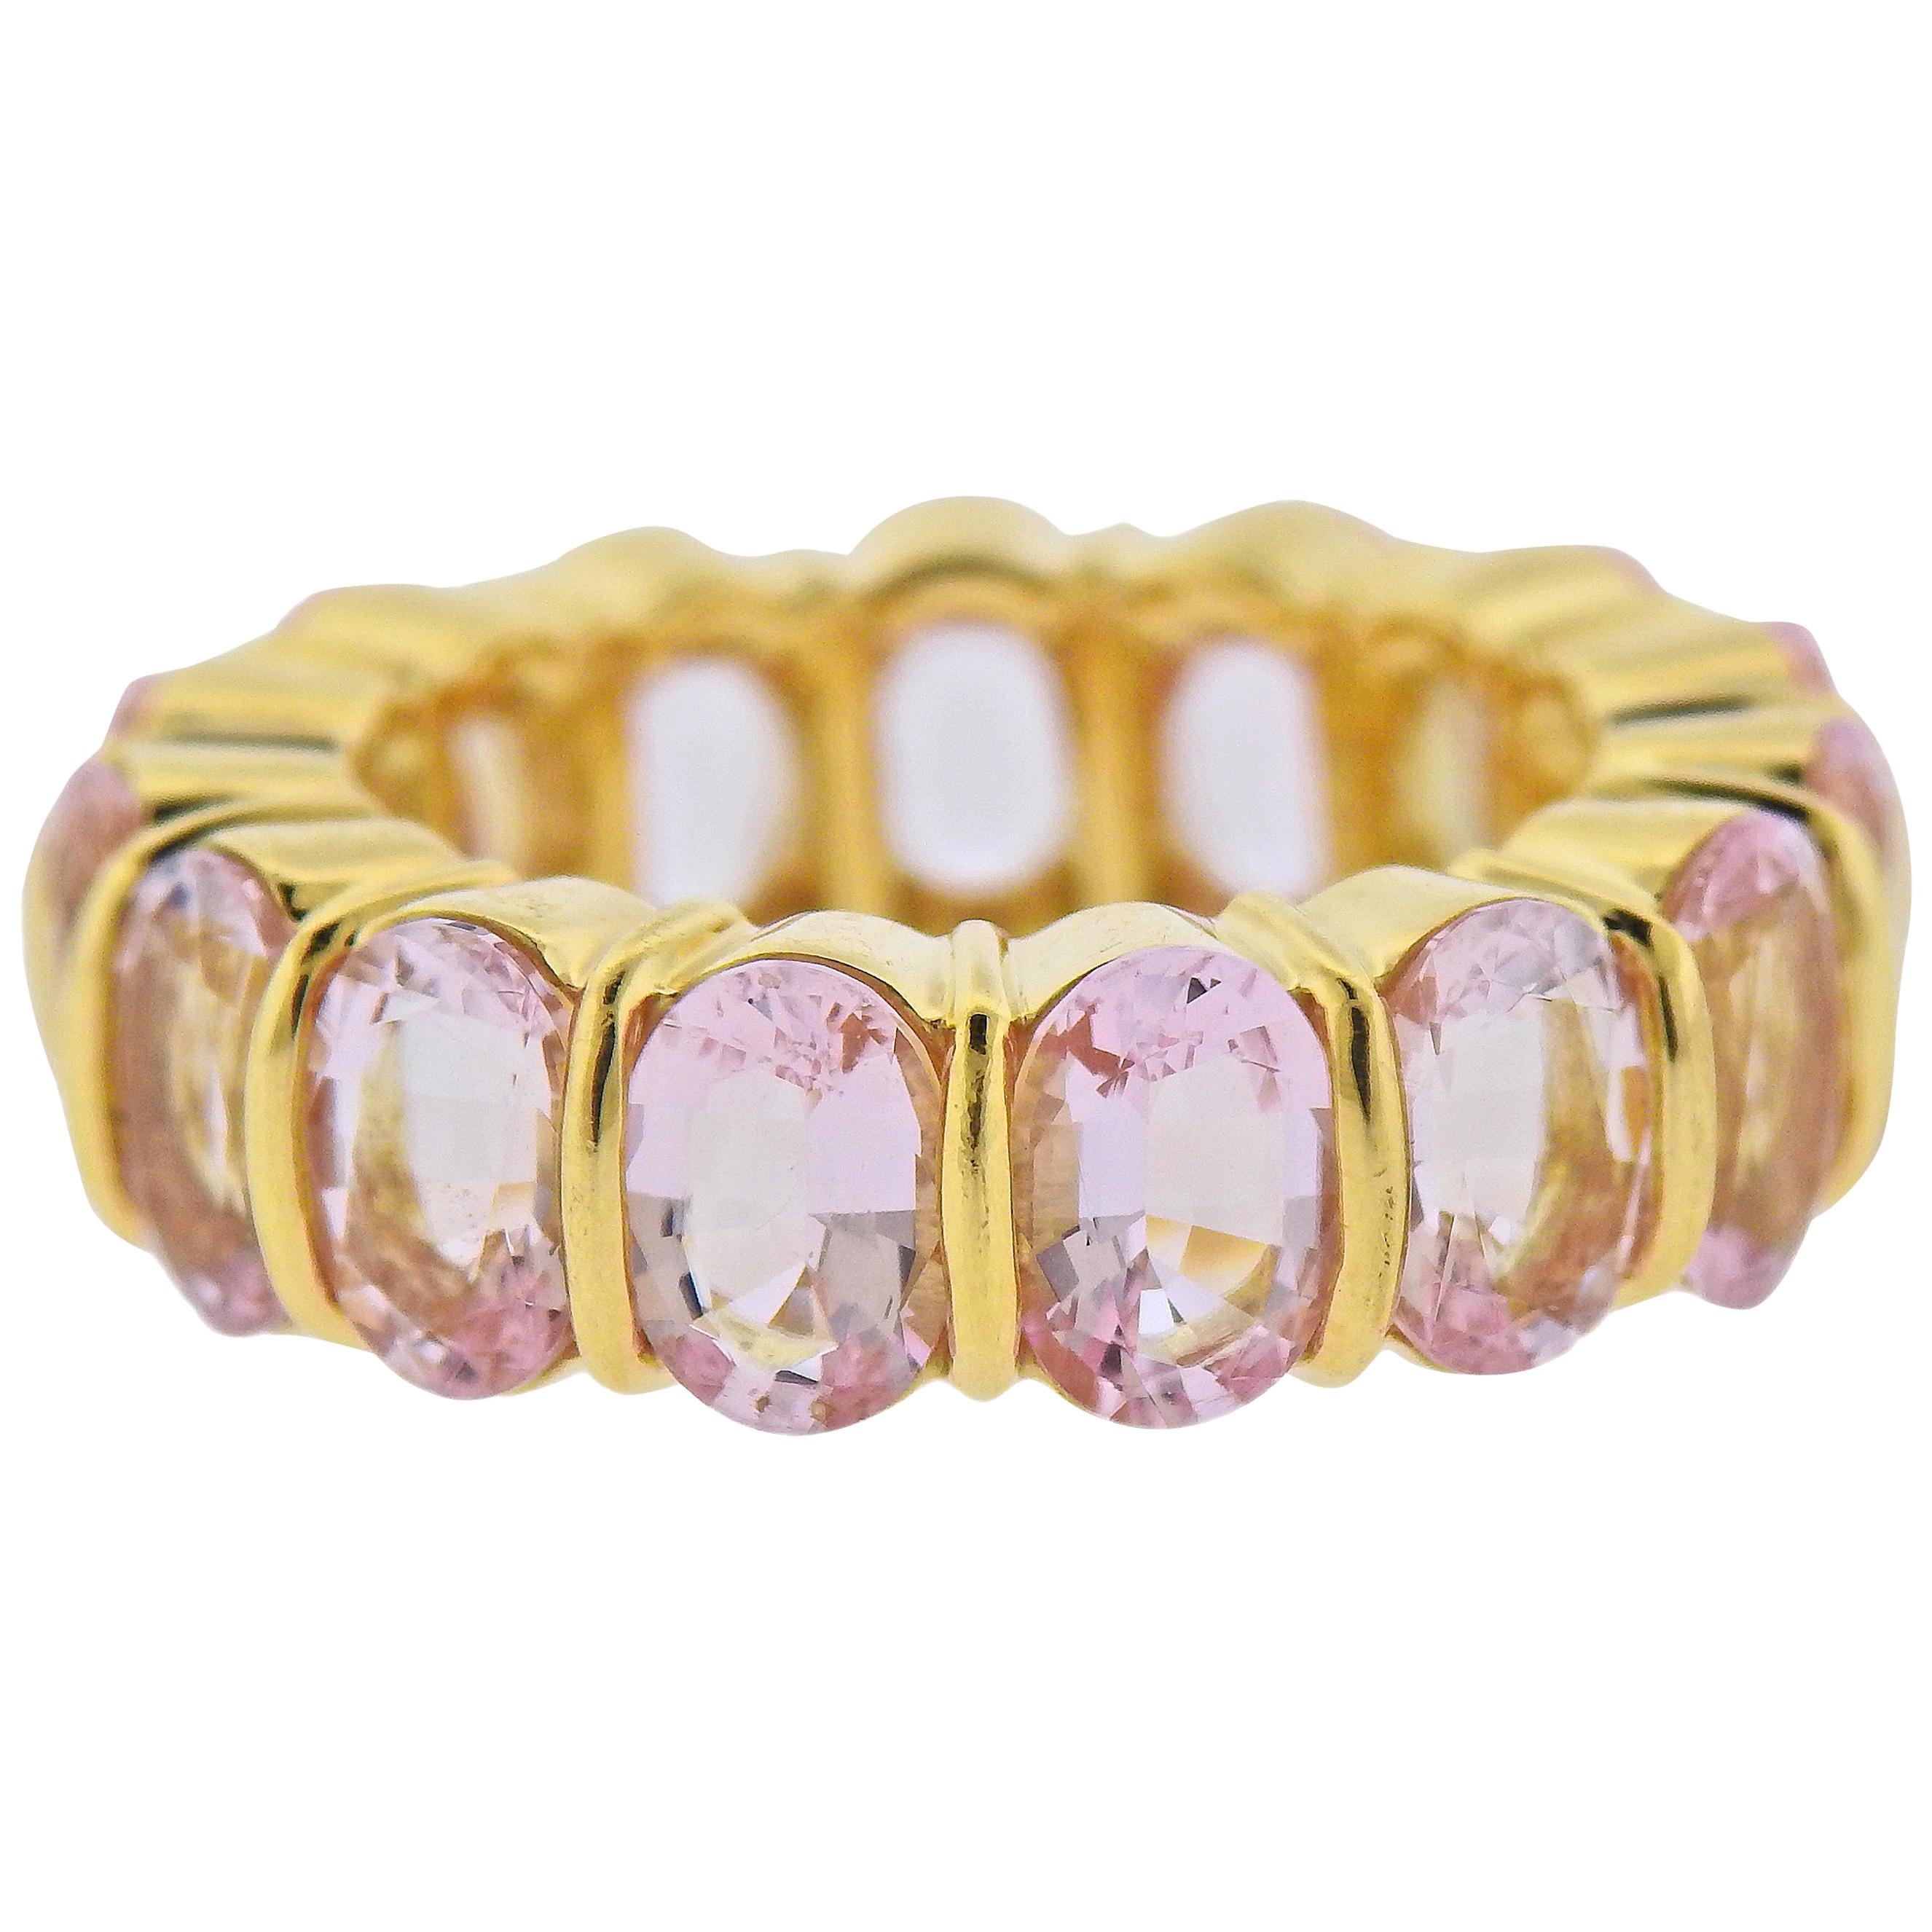 Impressive Gemlok Kunzite Gold Eternity Wedding Band Ring For Sale